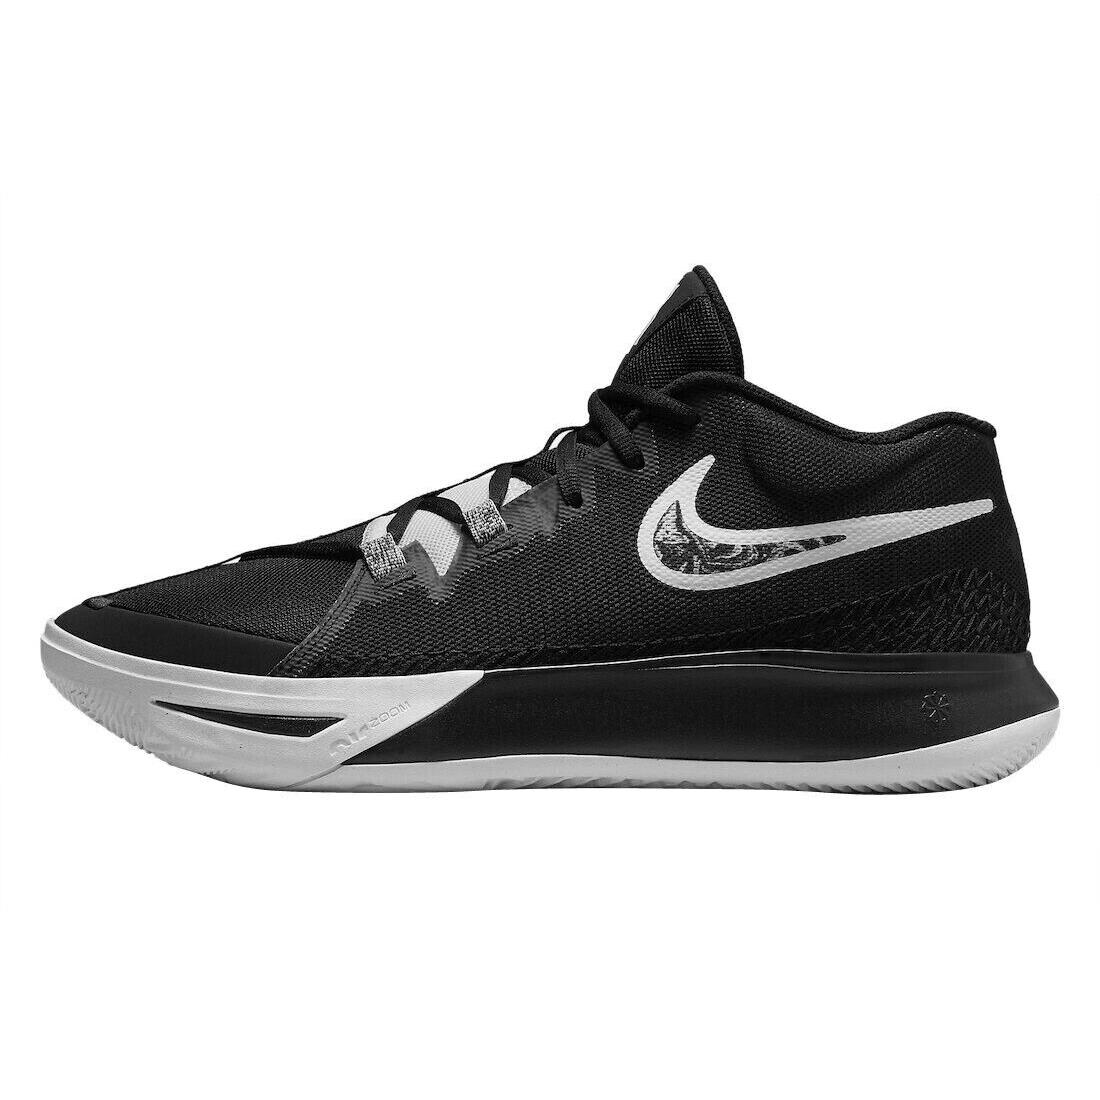 Nike Mens Kyrie Fflytrap VI Basketball Shoes Box NO Lid DM1125 001 - BLACK/WHITE IRON GREY